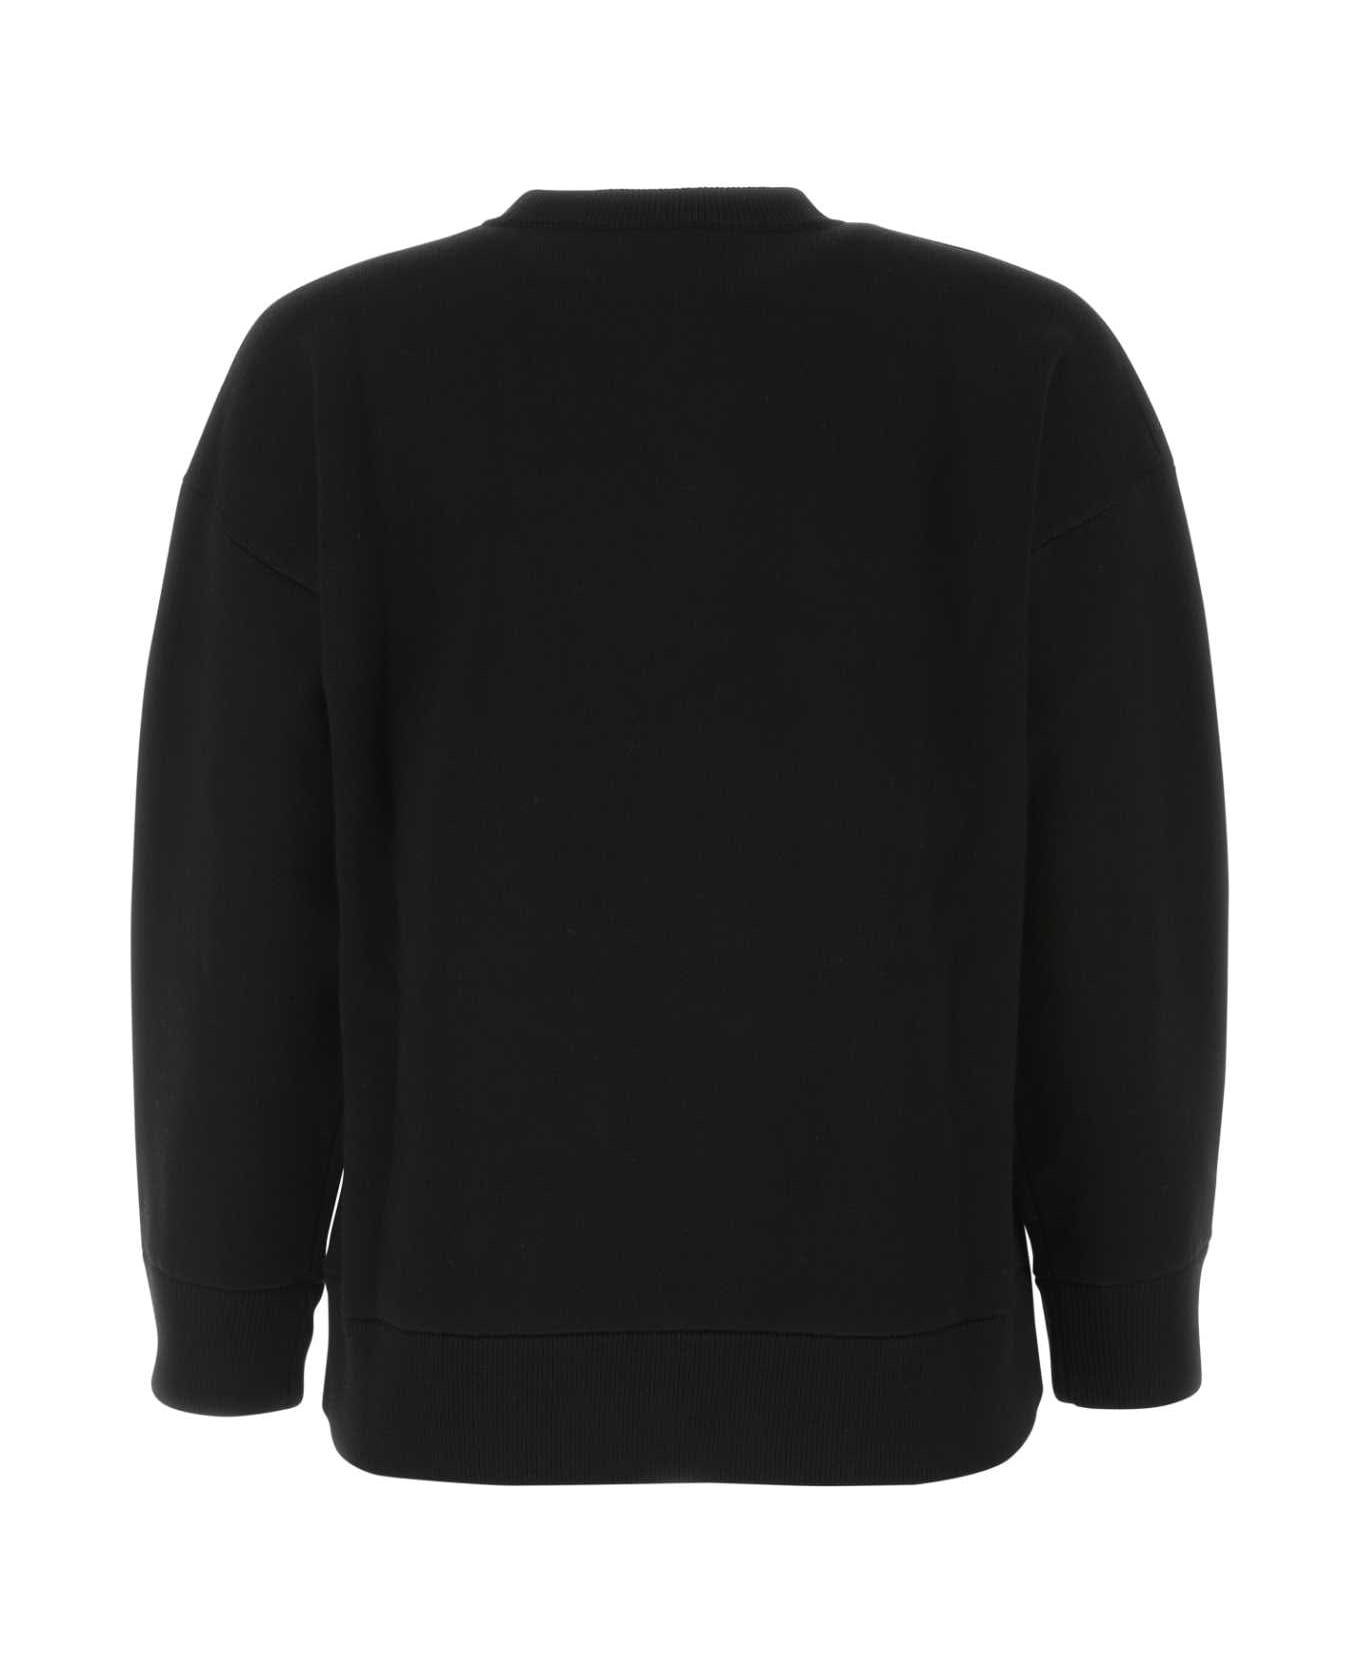 Burberry Black Stretch Wool Blend Sweater - A1189